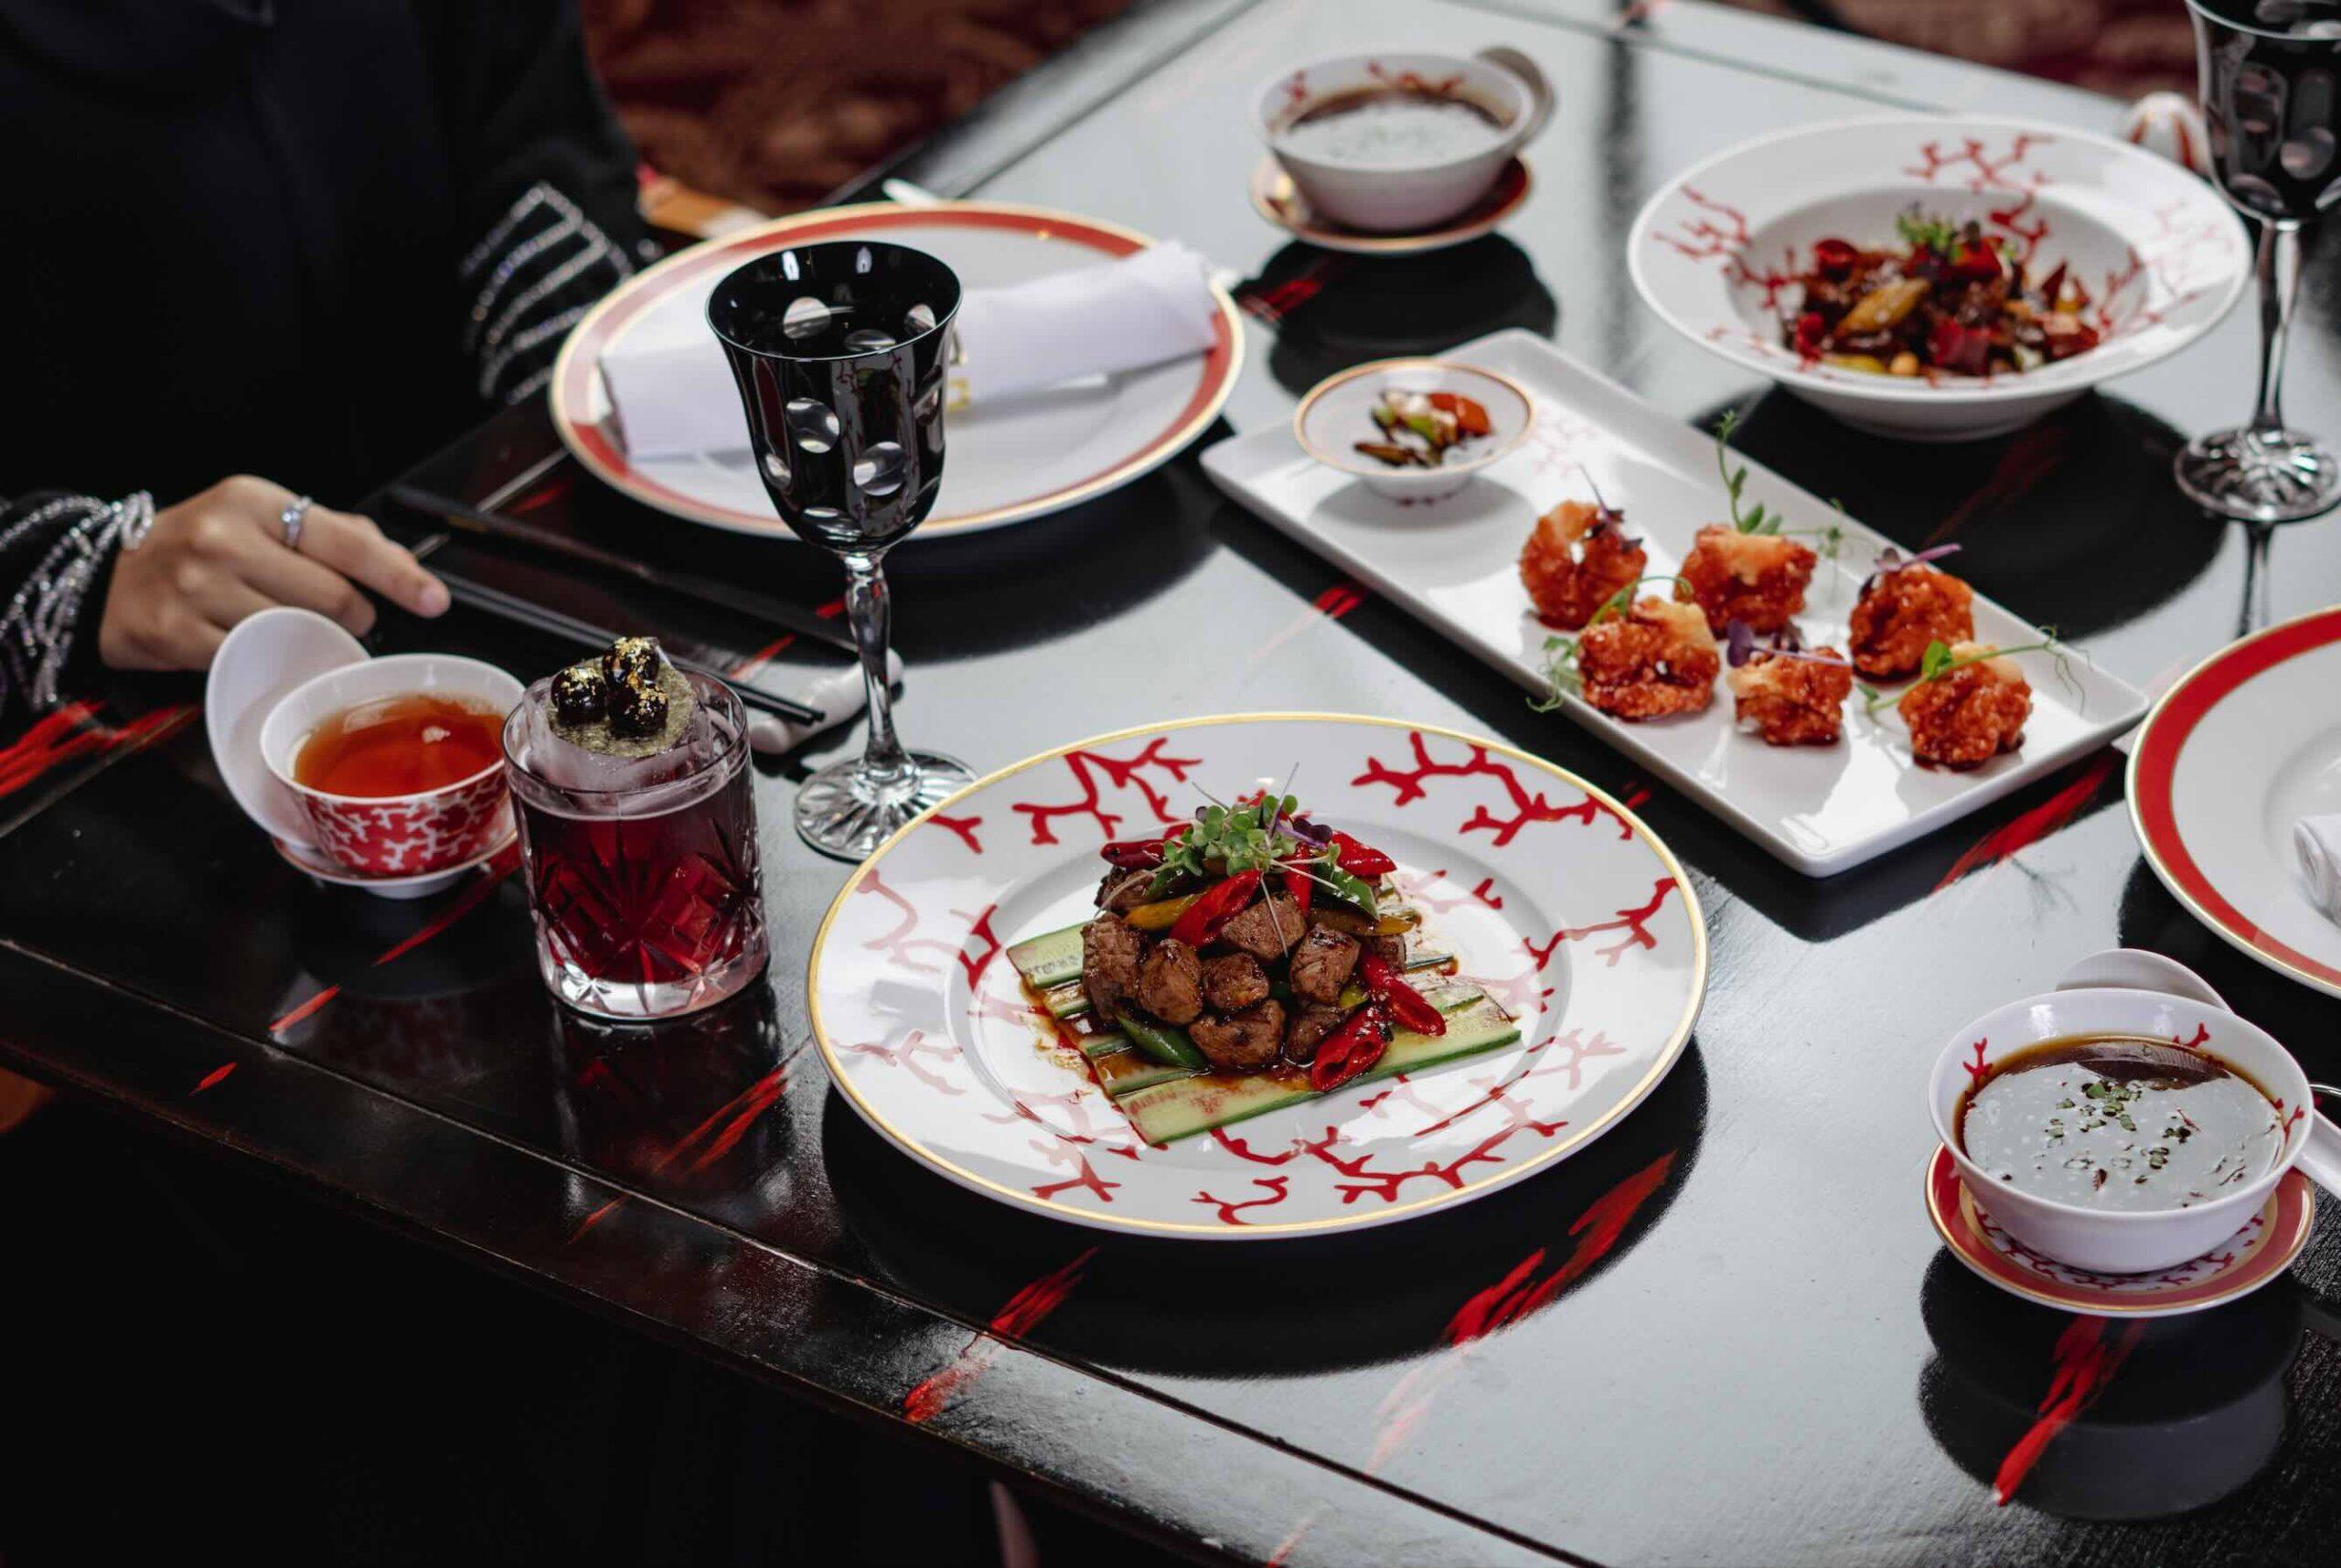 Hong marks a culinary comeback for Chinese cuisine in Riyadh